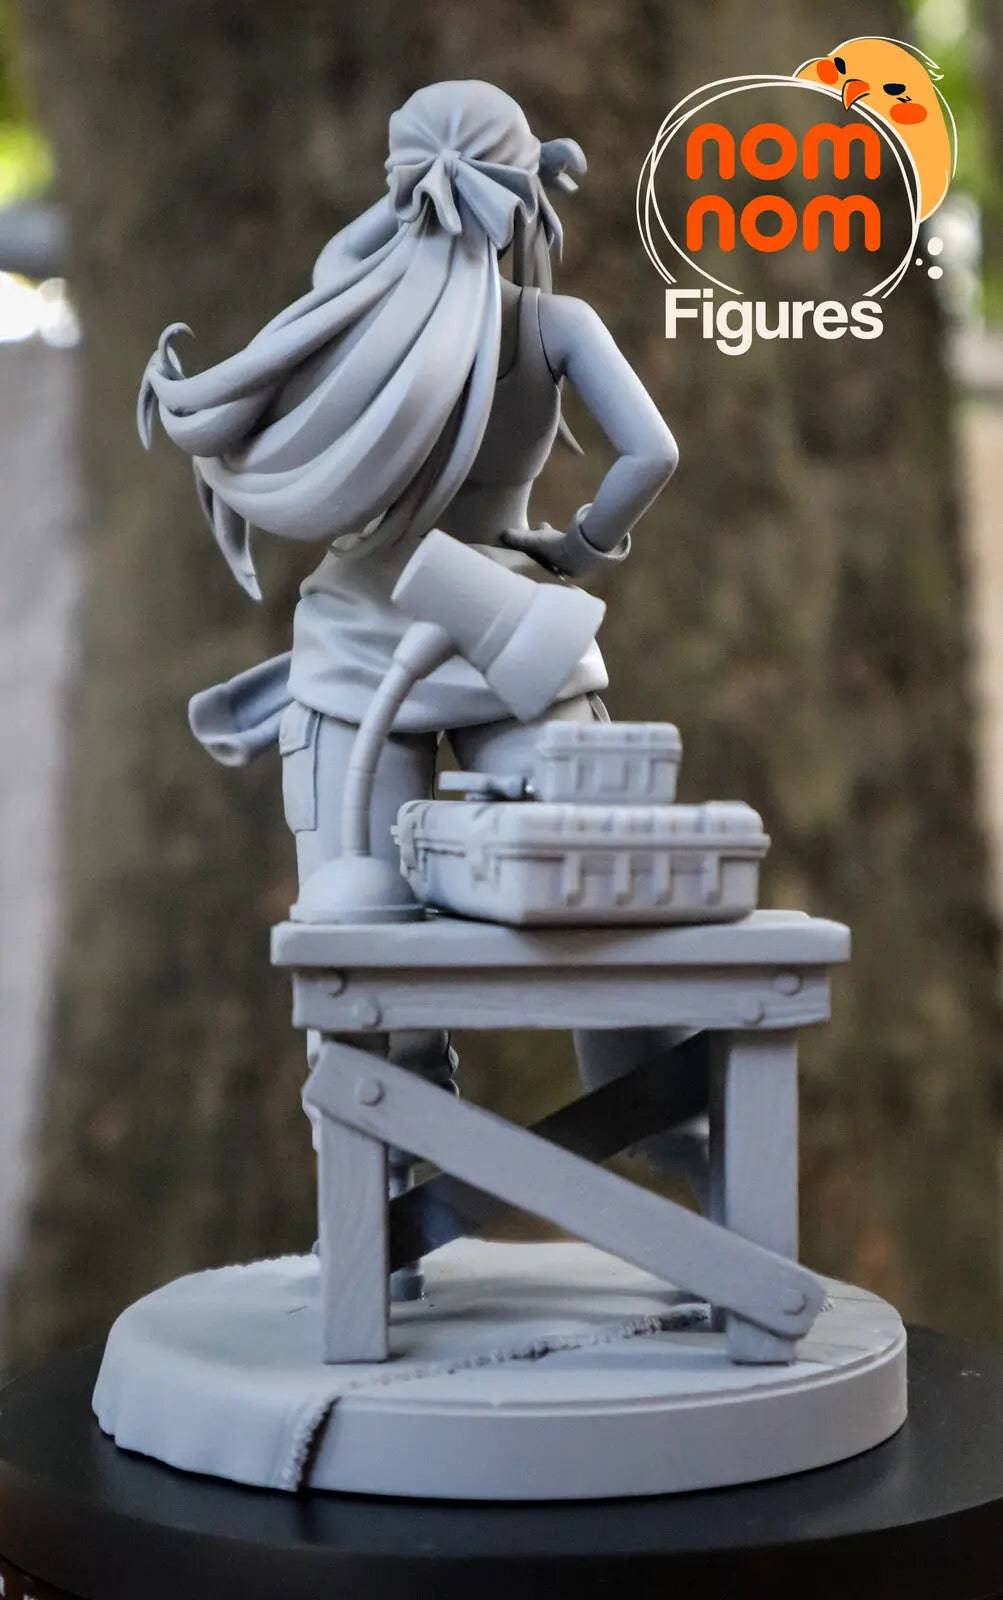 Master Mechanic | Resin Garage Kit Sculpture Anime Video Game Fan Art Statue | Nomnom Figures - Tattles Told 3D